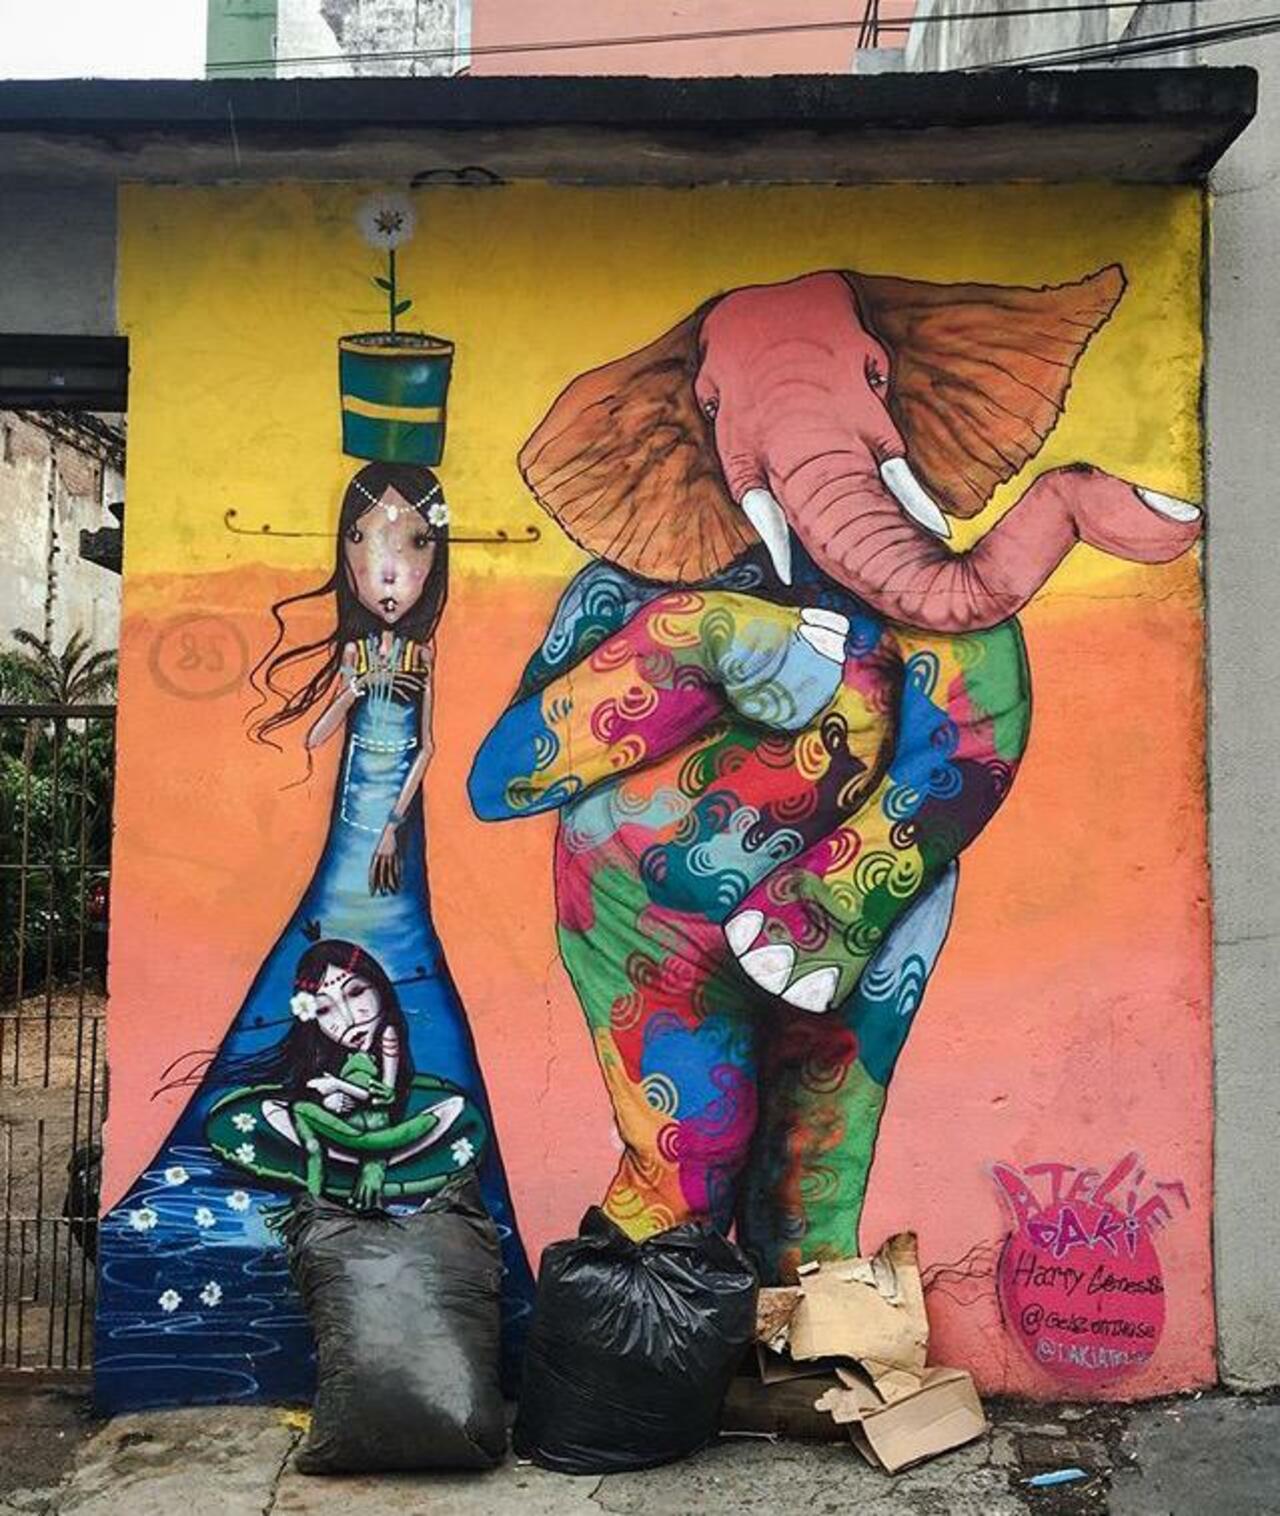 Street Art by Harry Geneis & Gelson in São Paulo #art #mural #graffiti #streetart http://t.co/SlLbhuMZfD … … … … http://twitter.com/charlesjackso14/status/648021494925291520